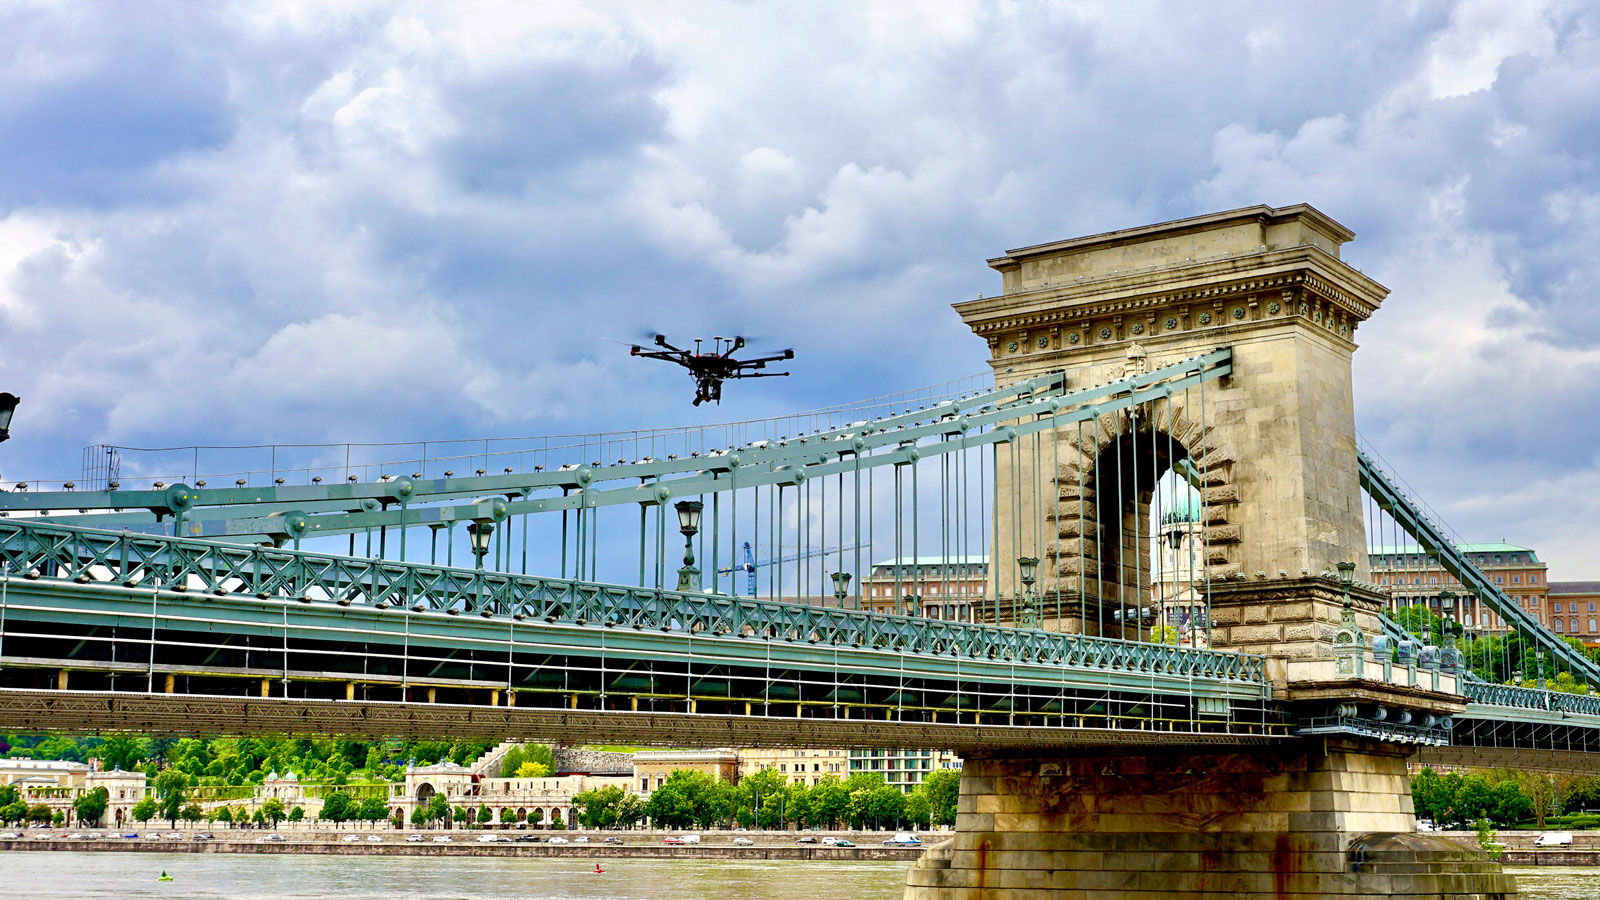 3D model of the Chain Bridge in Budapest